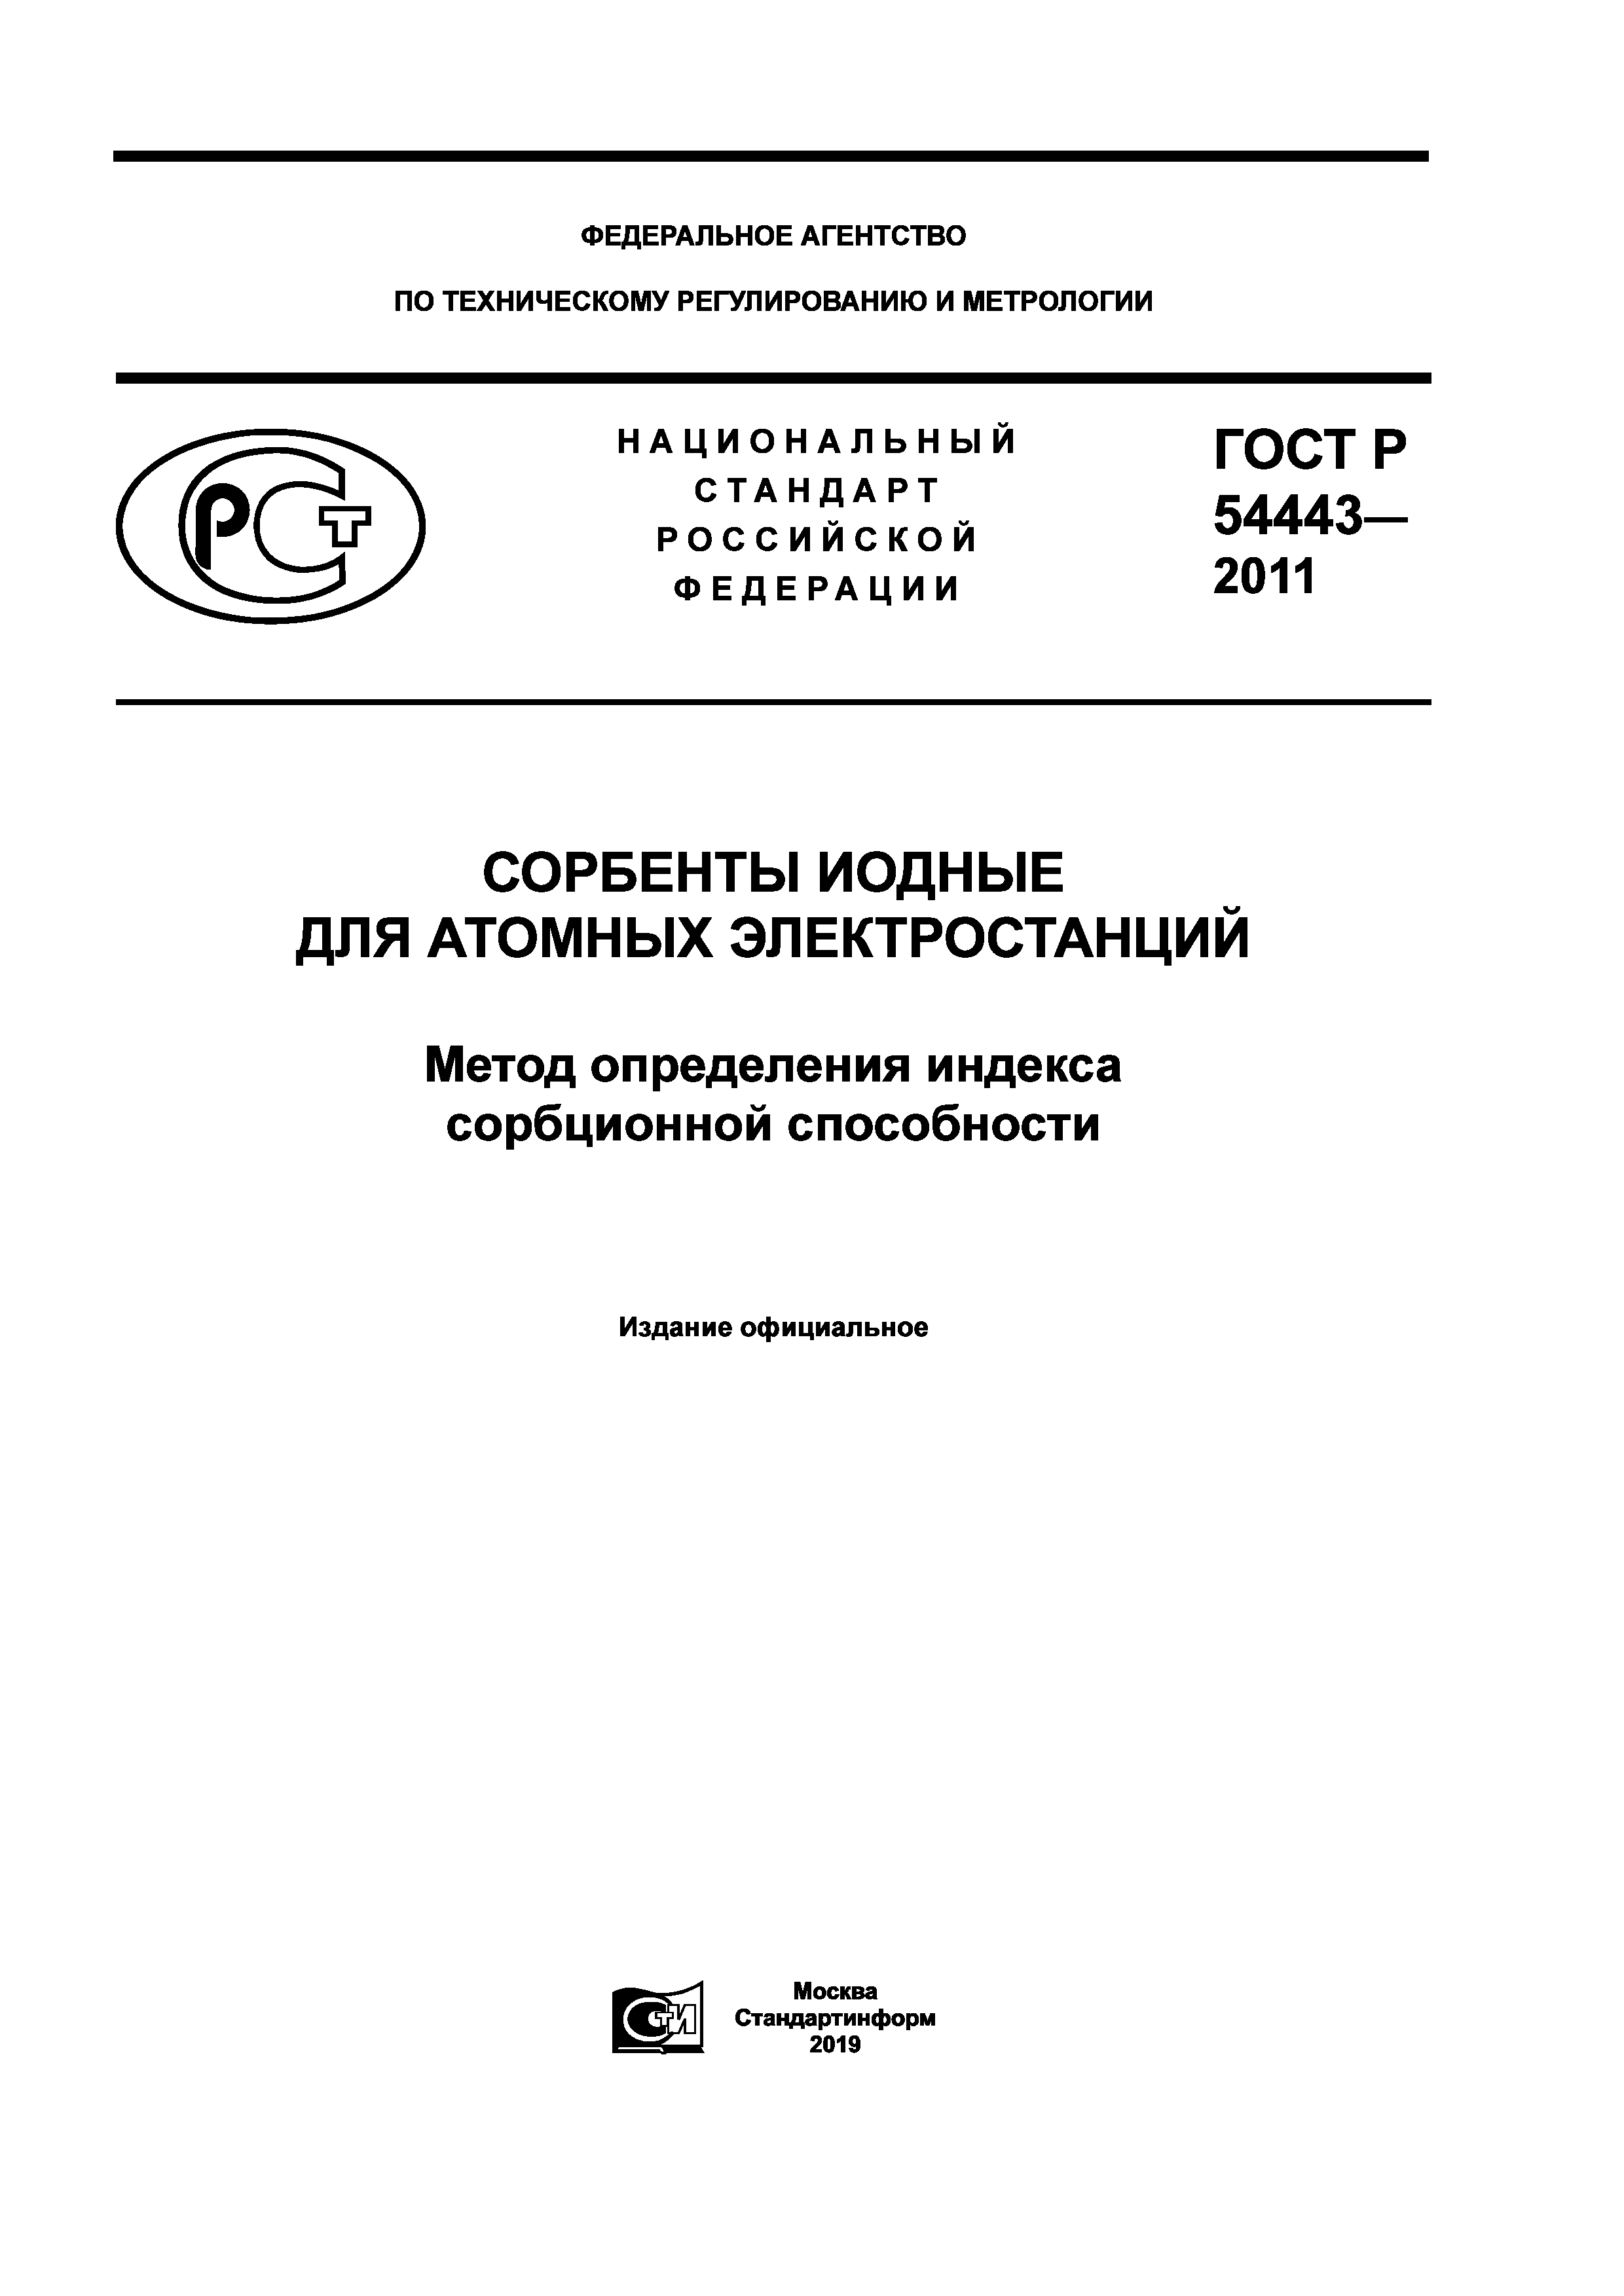 ГОСТ Р 54443-2011